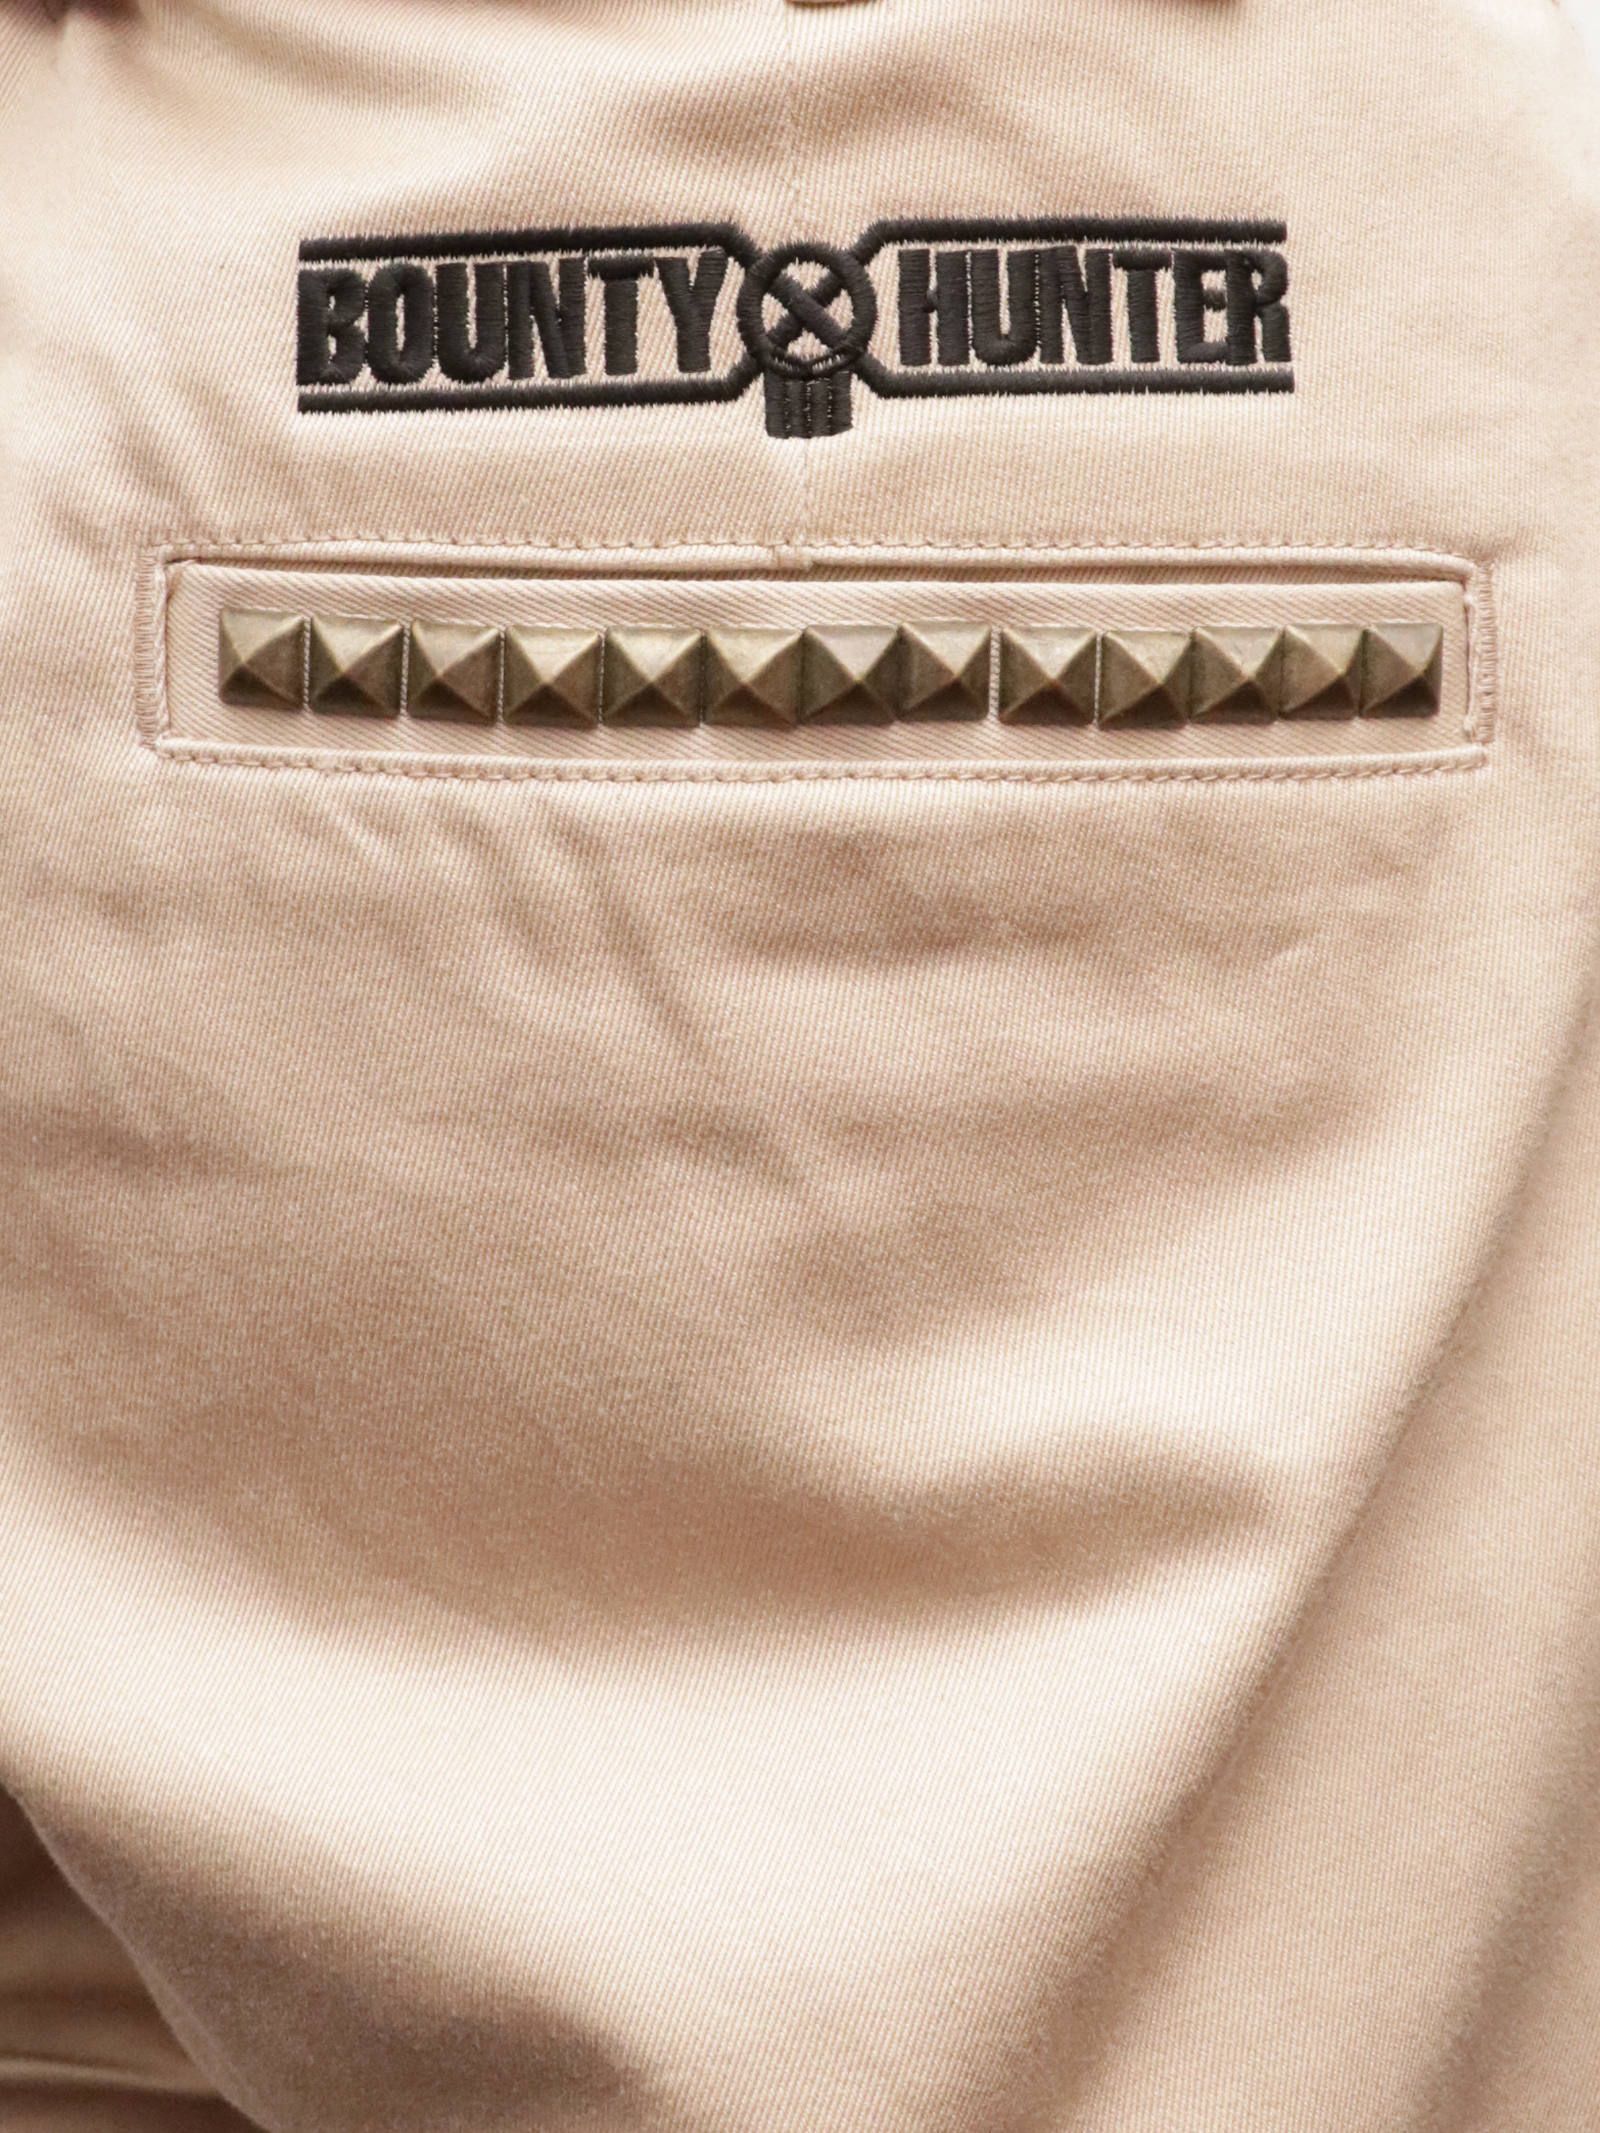 BOUNTY HUNTER - スタッズパンツ (ベージュ) / Studs Pants (BEIGE